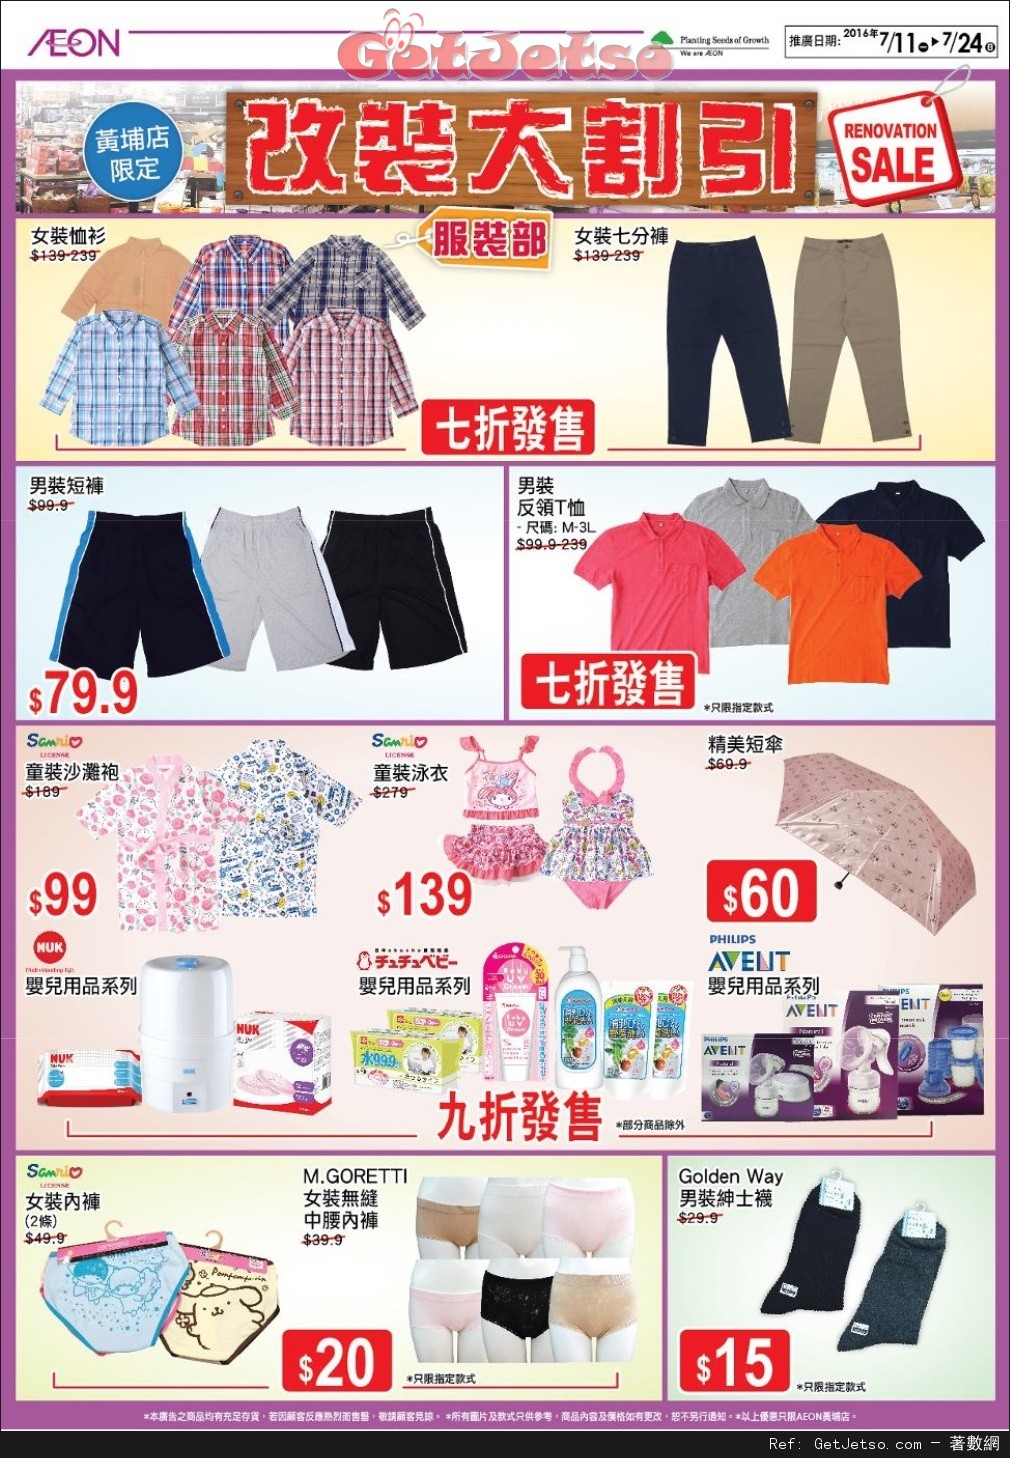 AEON 黃埔店改裝大割引購物優惠(至16年7月24日)圖片2